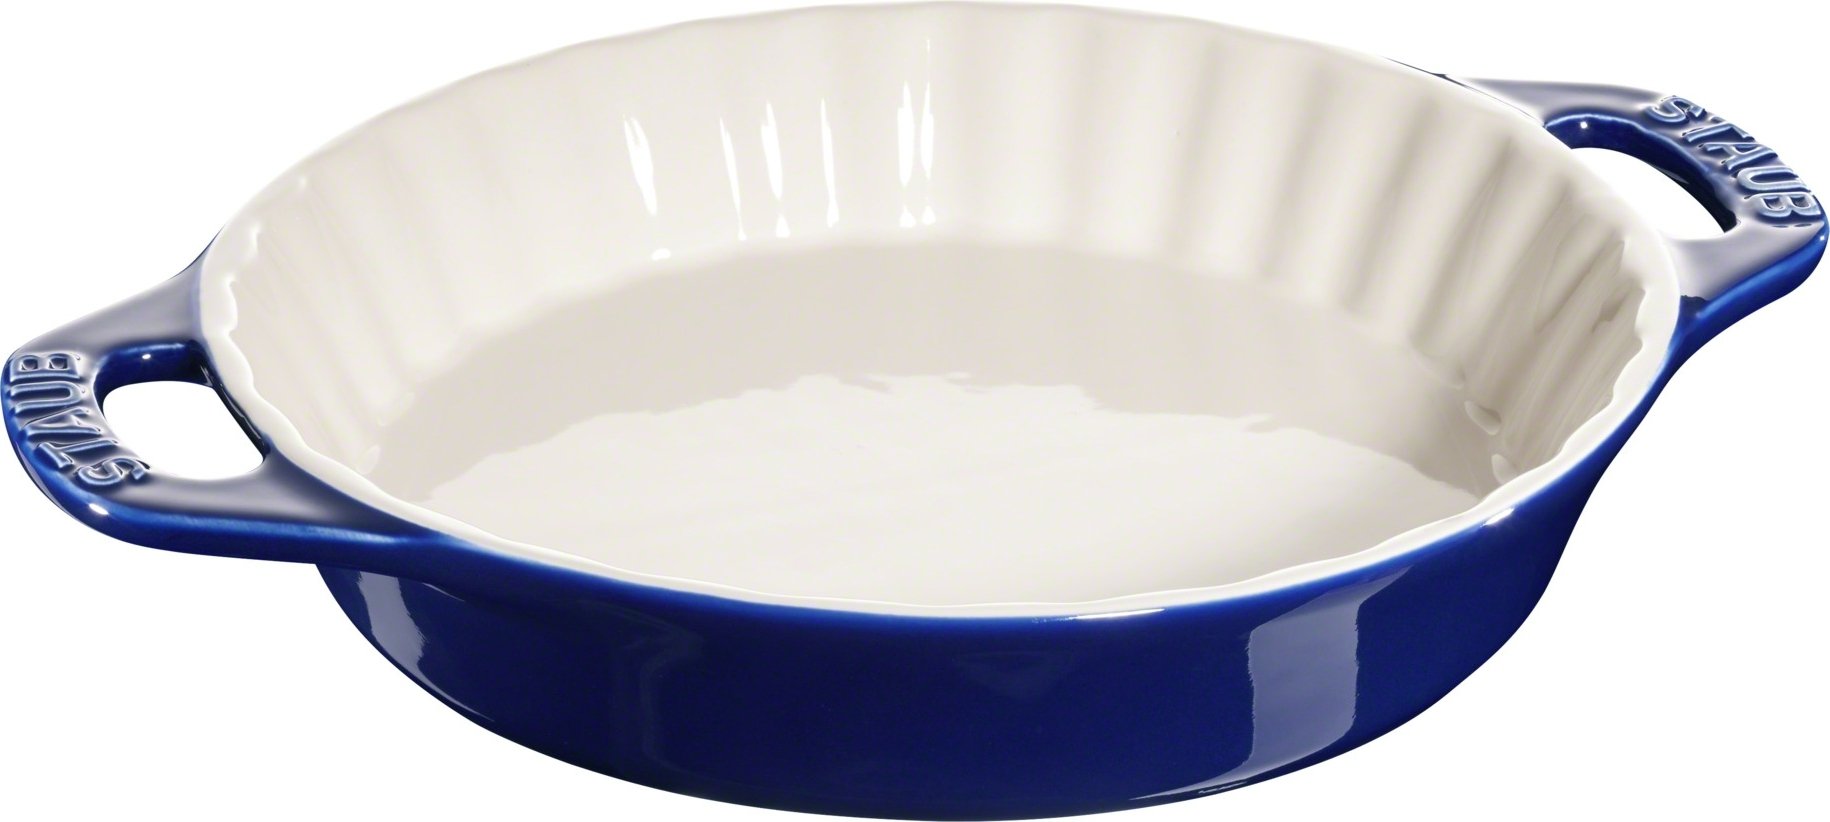 Staub - Ceramic 9.4" Pie Dish Dark Blue - 40511-165